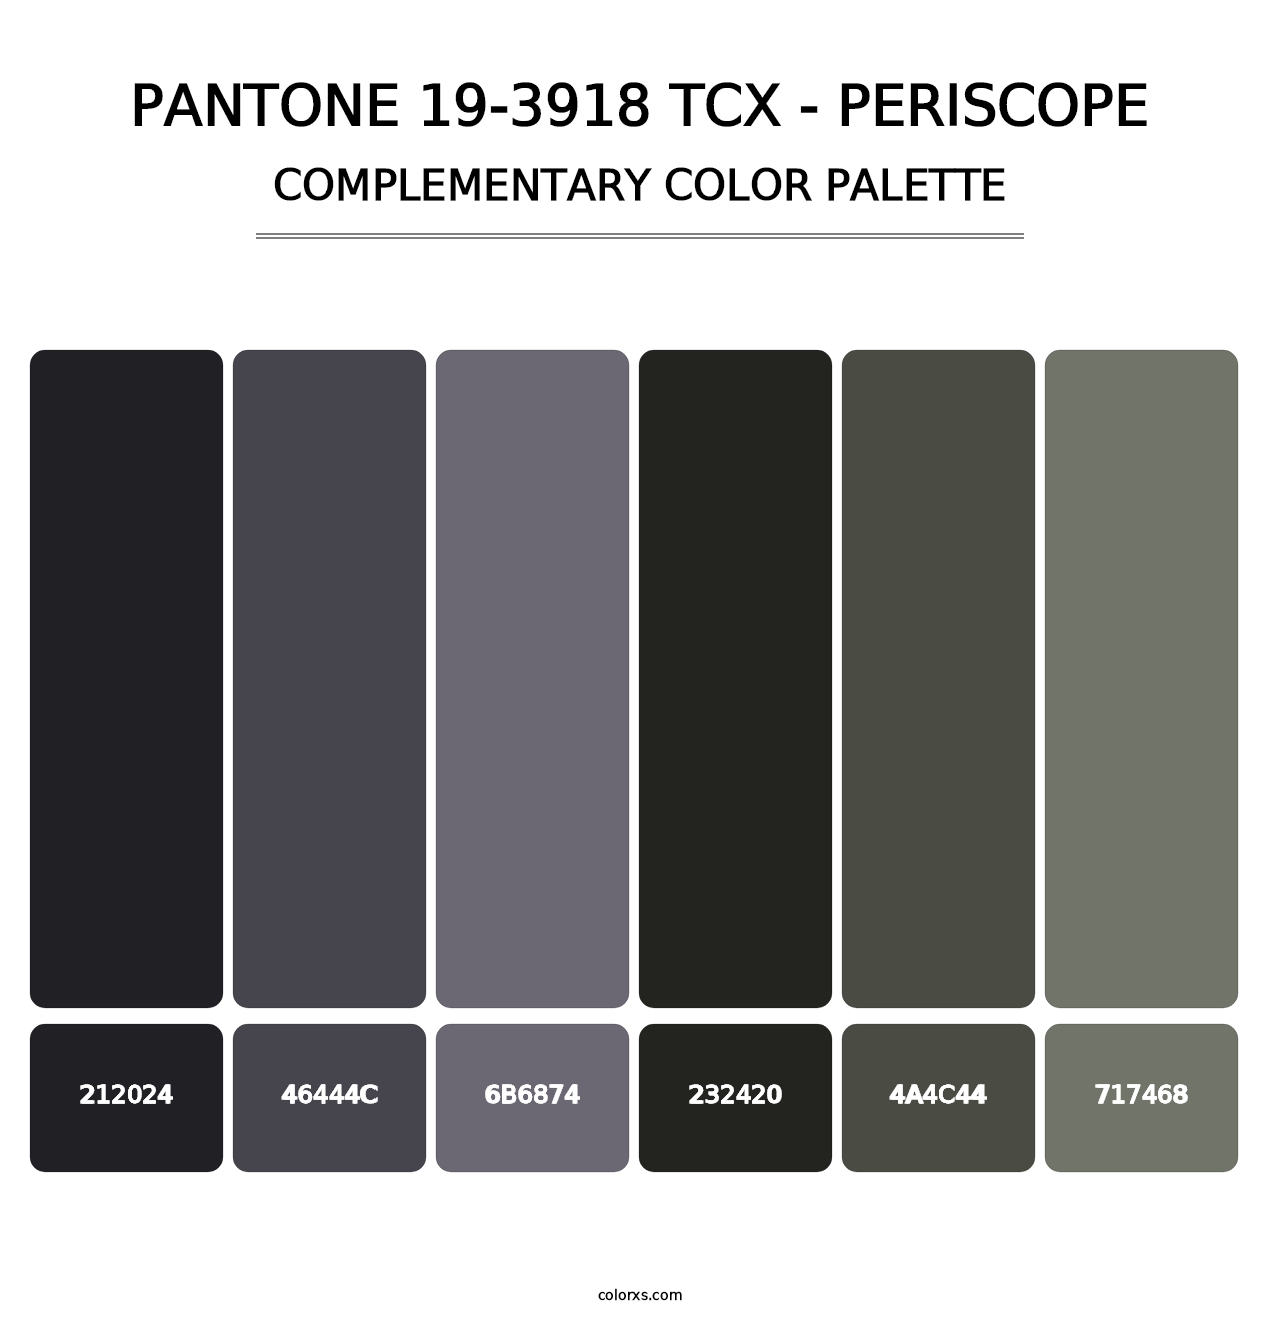 PANTONE 19-3918 TCX - Periscope - Complementary Color Palette